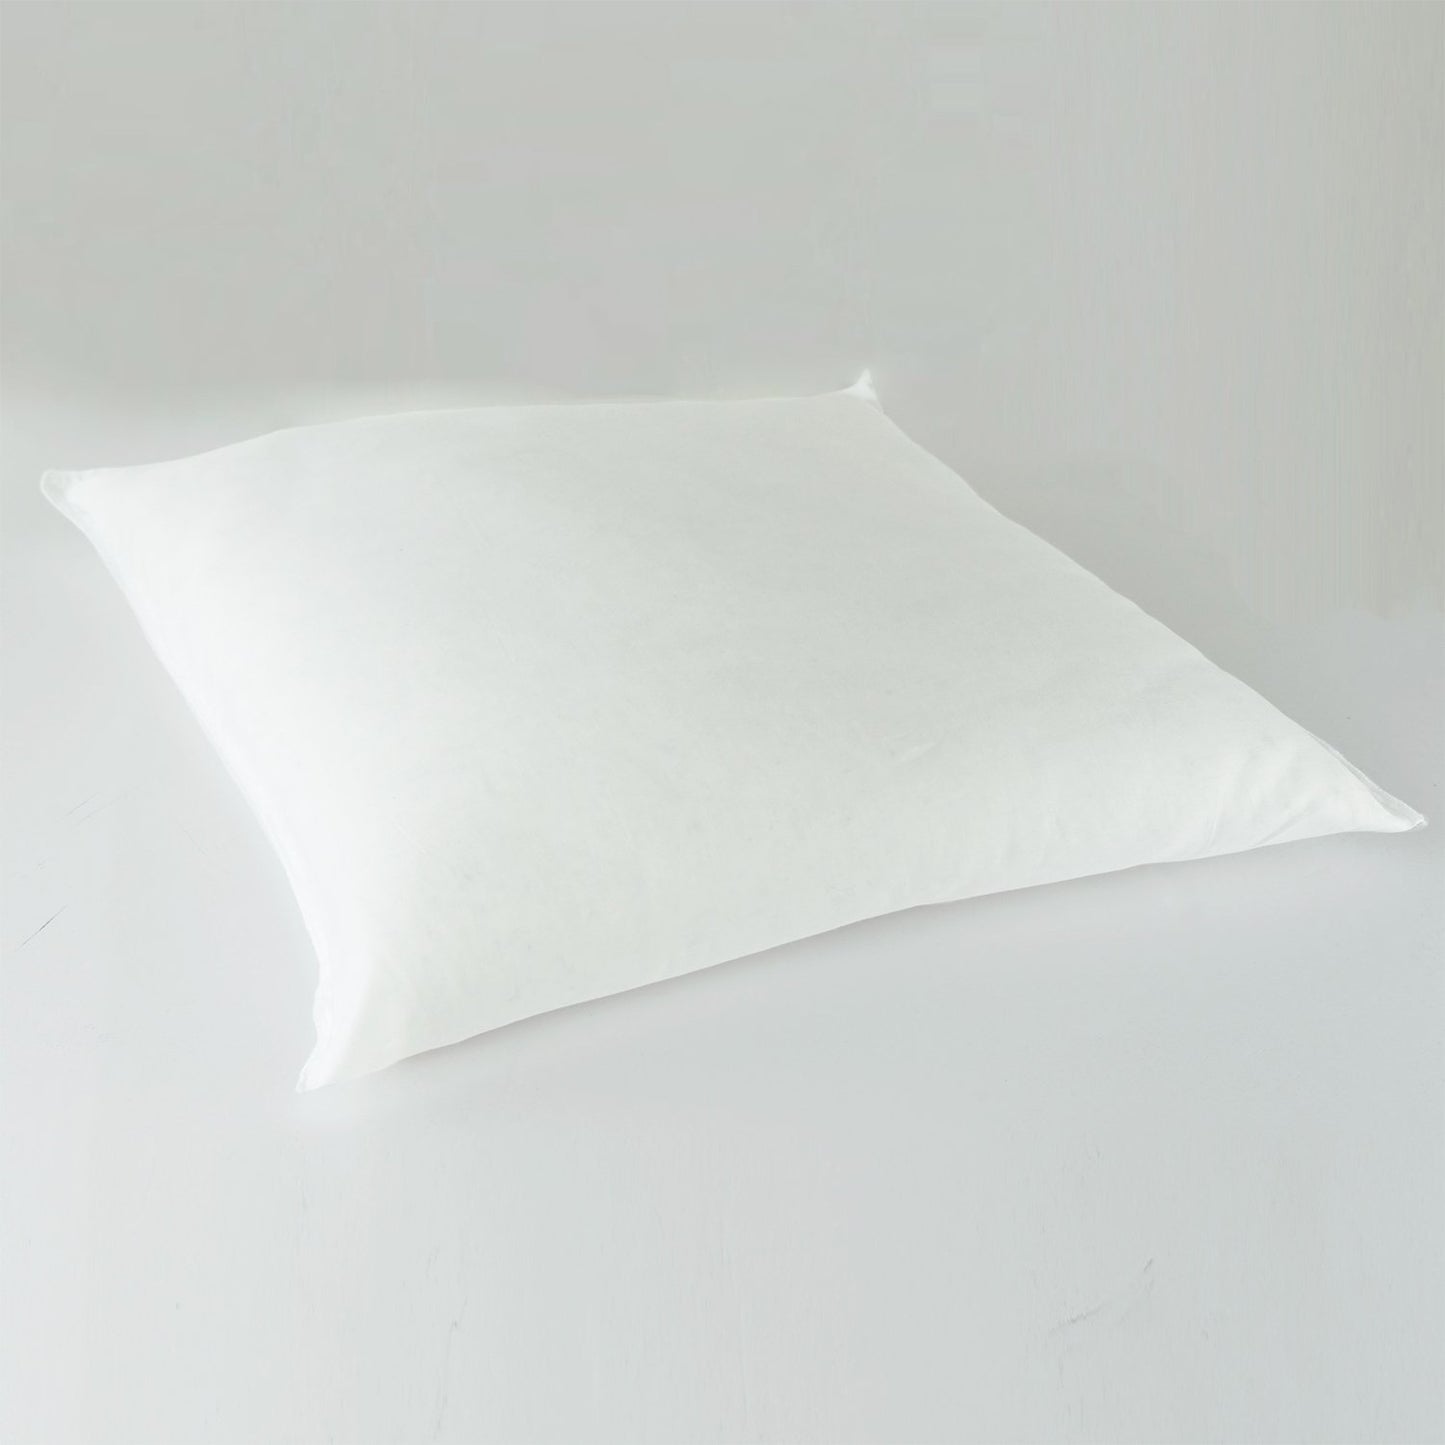 J-Life Sakura Brown Zabuton Floor Pillow_Pillows & Shams_Zabuton Floor Pillows_100% Cotton_Reversible_Handmade